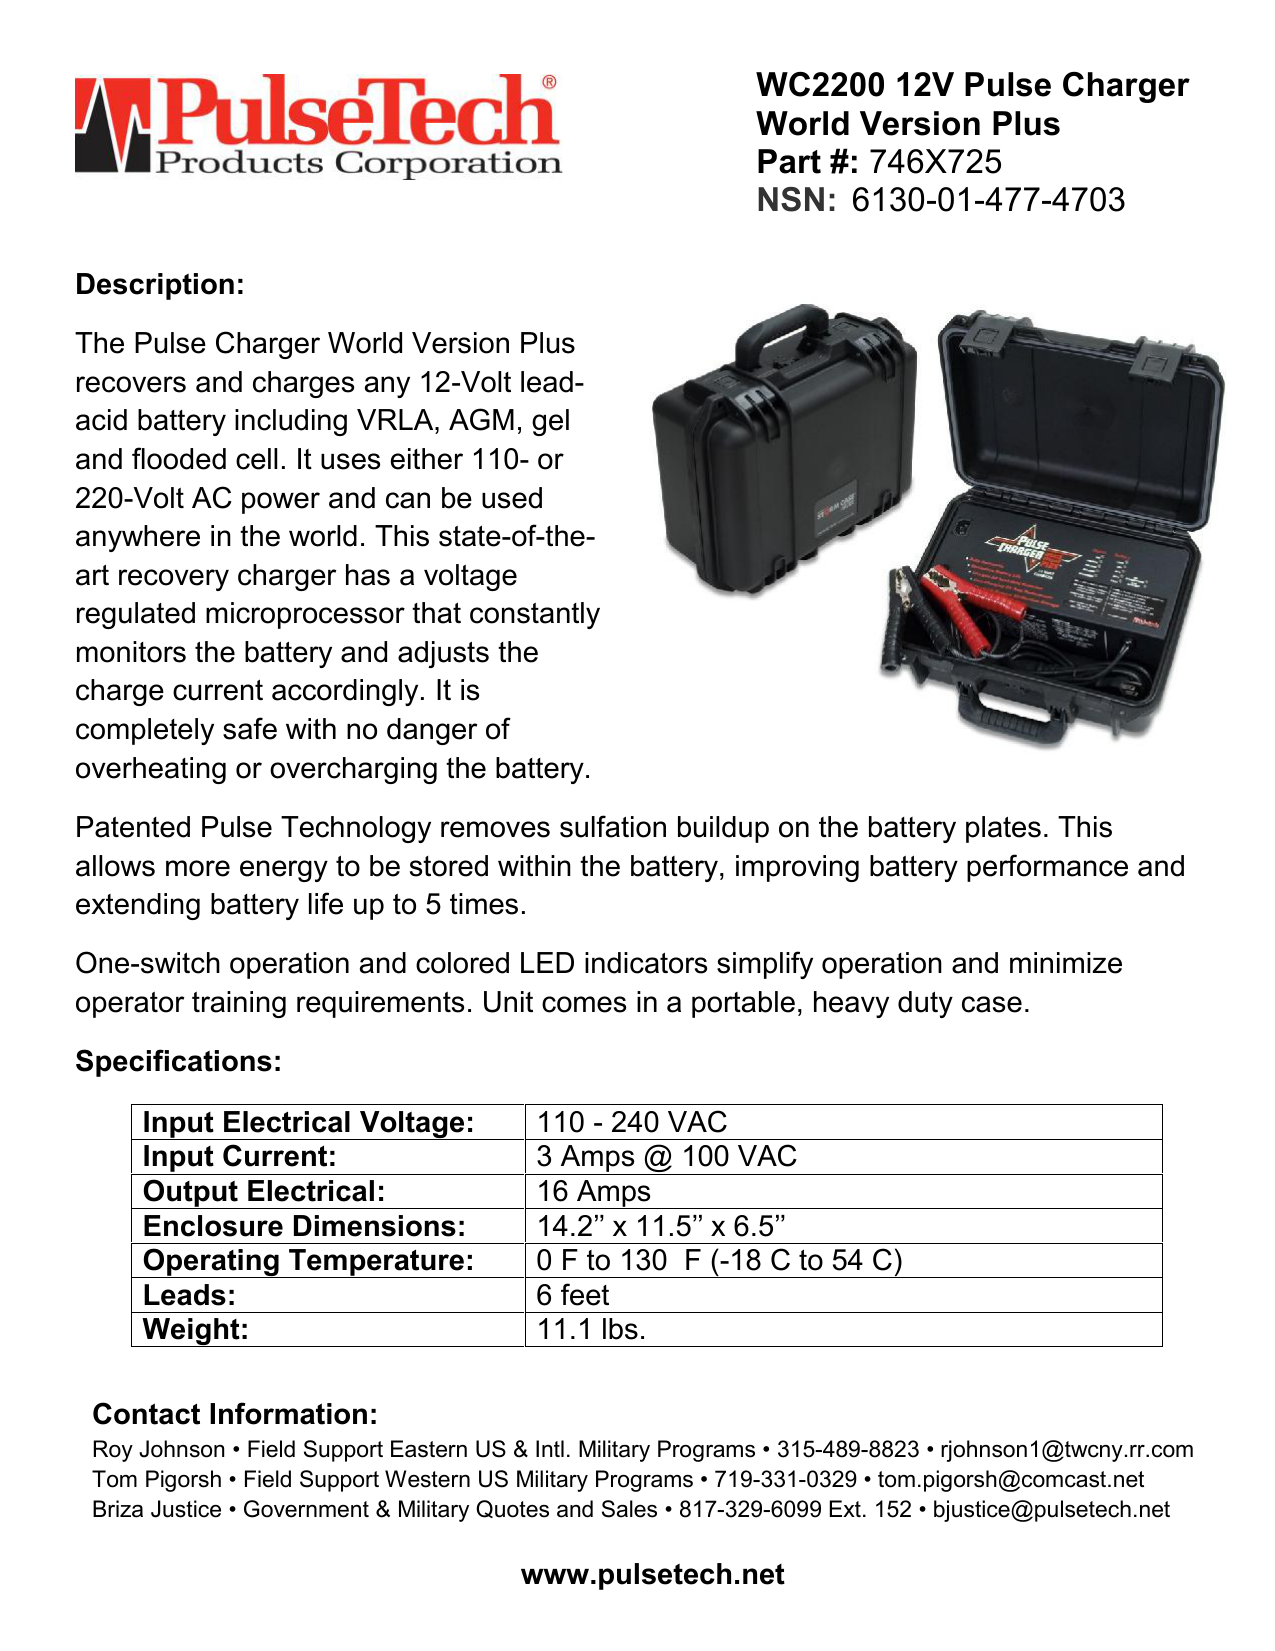 12v battery pulse charger manual